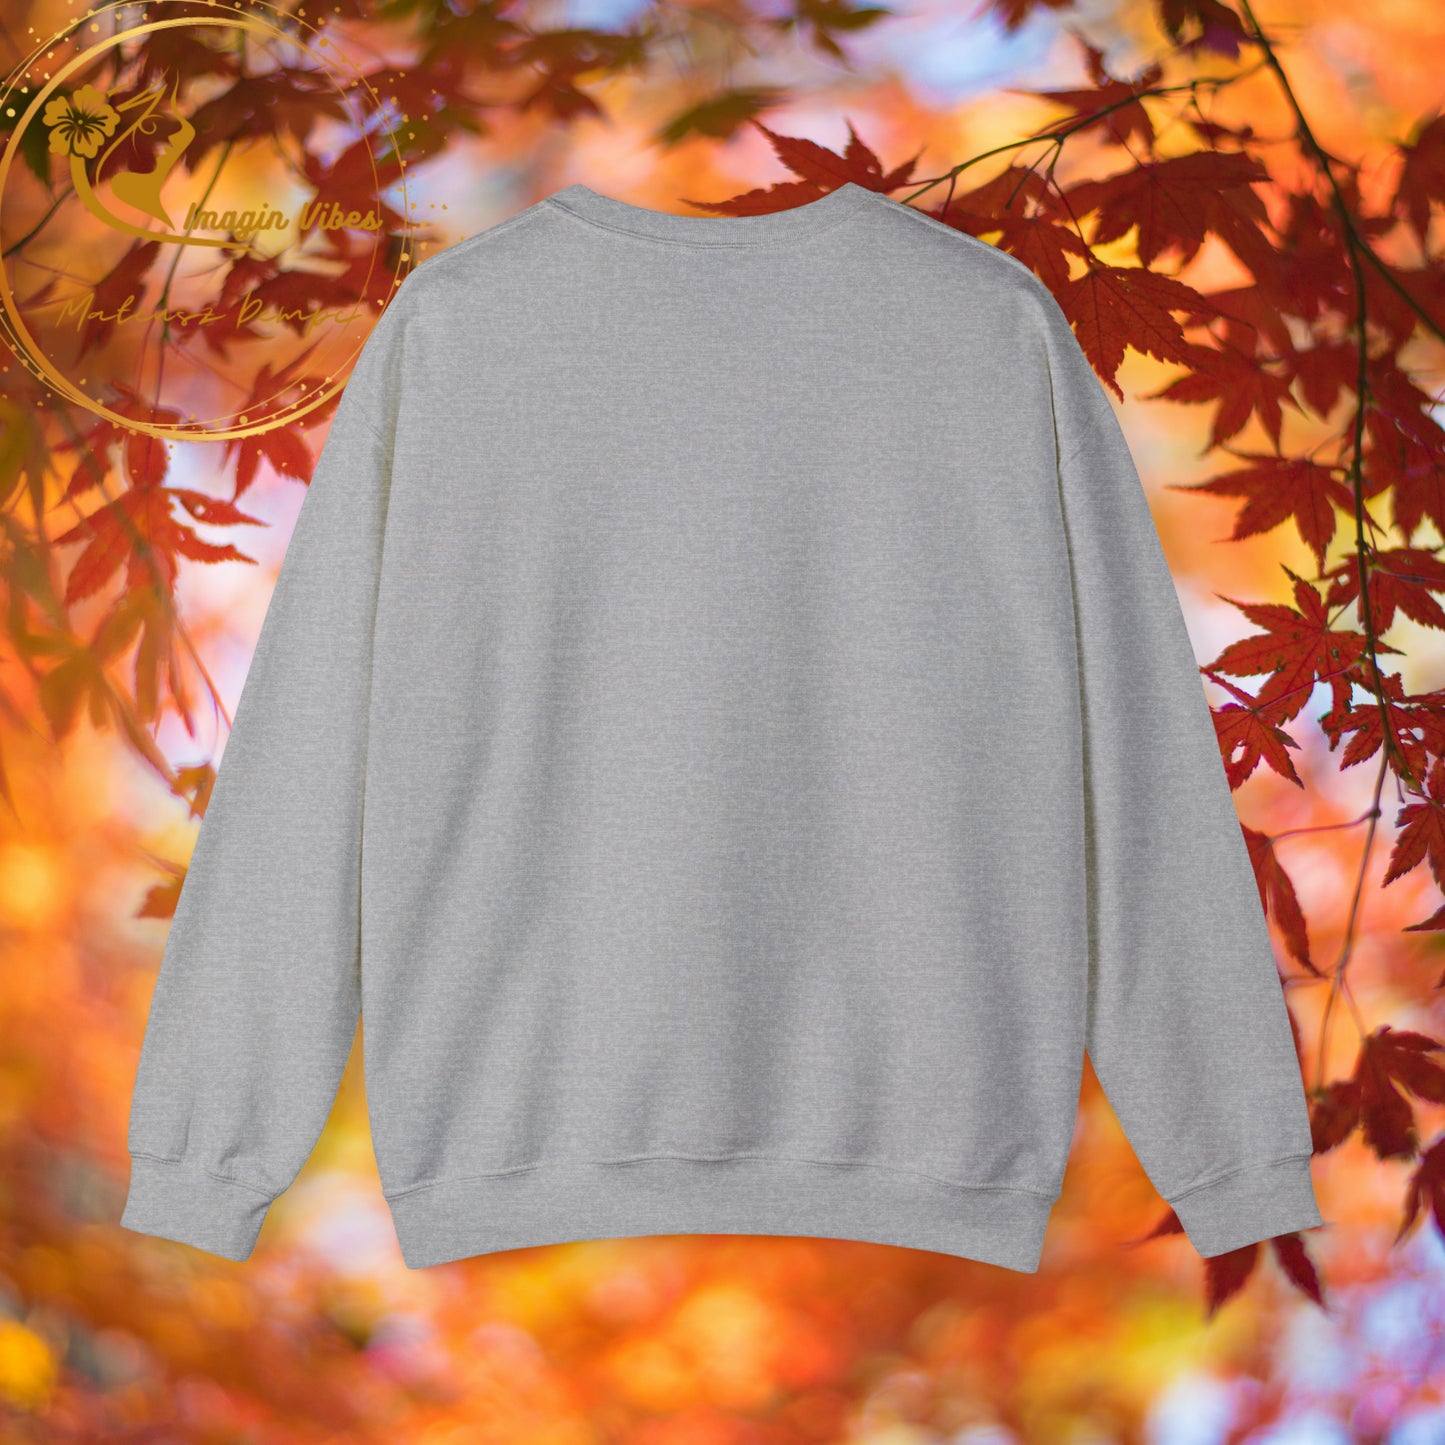 Hello Autumn Sweatshirt | Fall Design | Fall Seasonal Sweatshirt | Autumn Tree Sweatshirt   